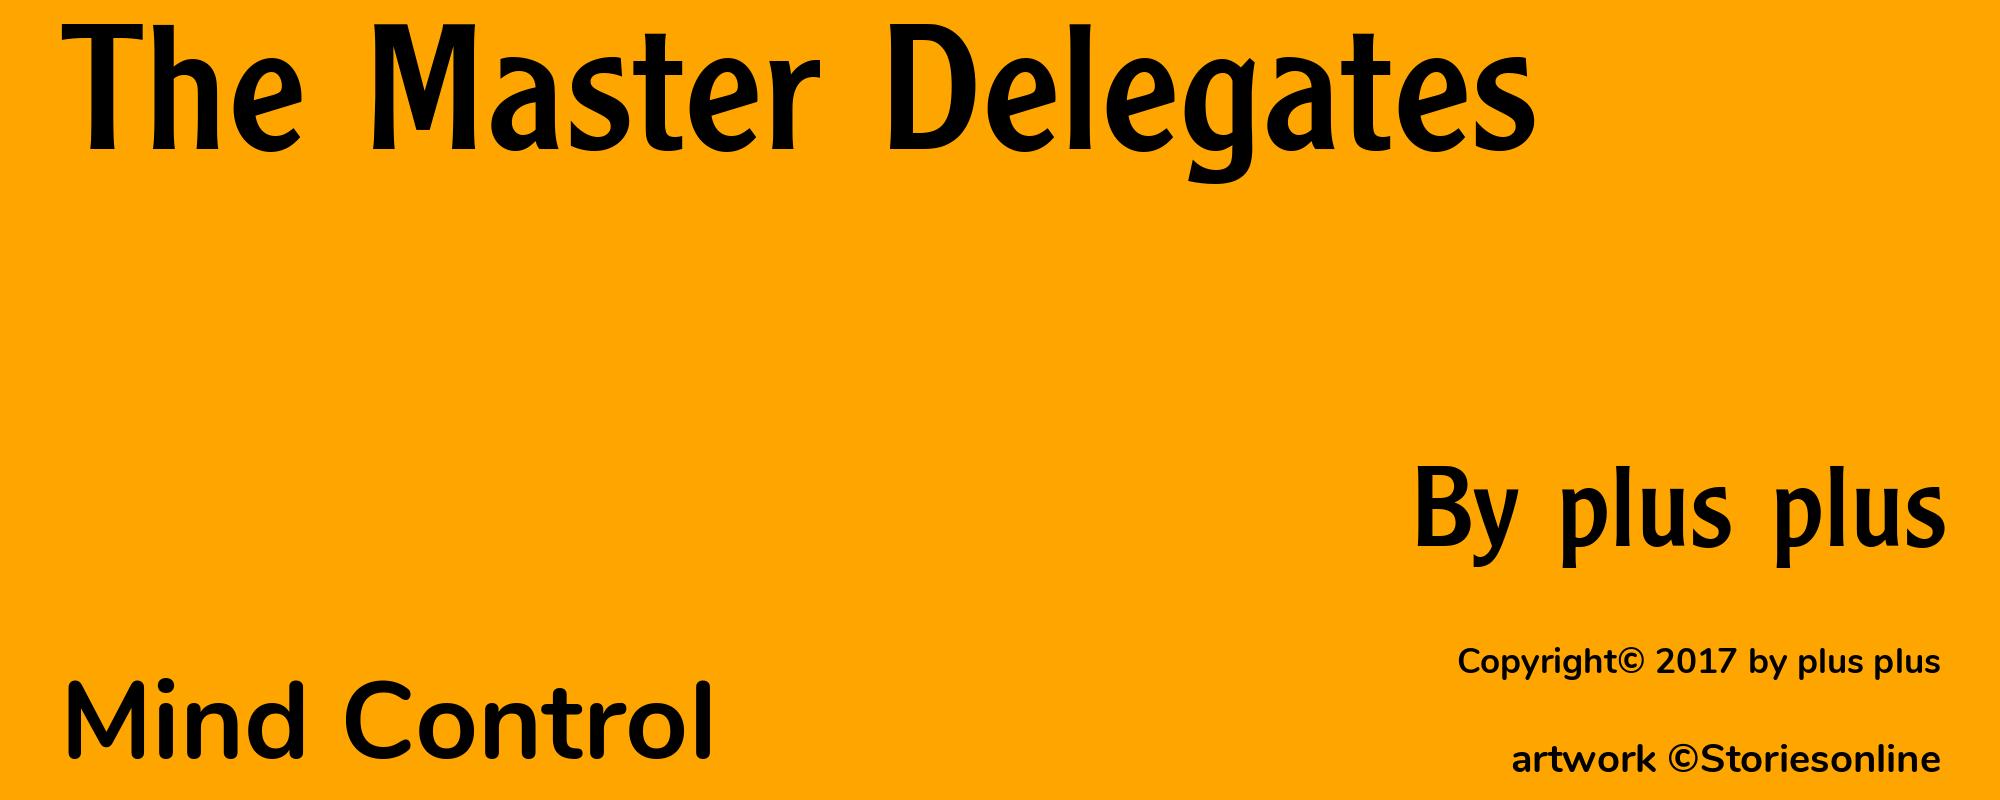 The Master Delegates - Cover